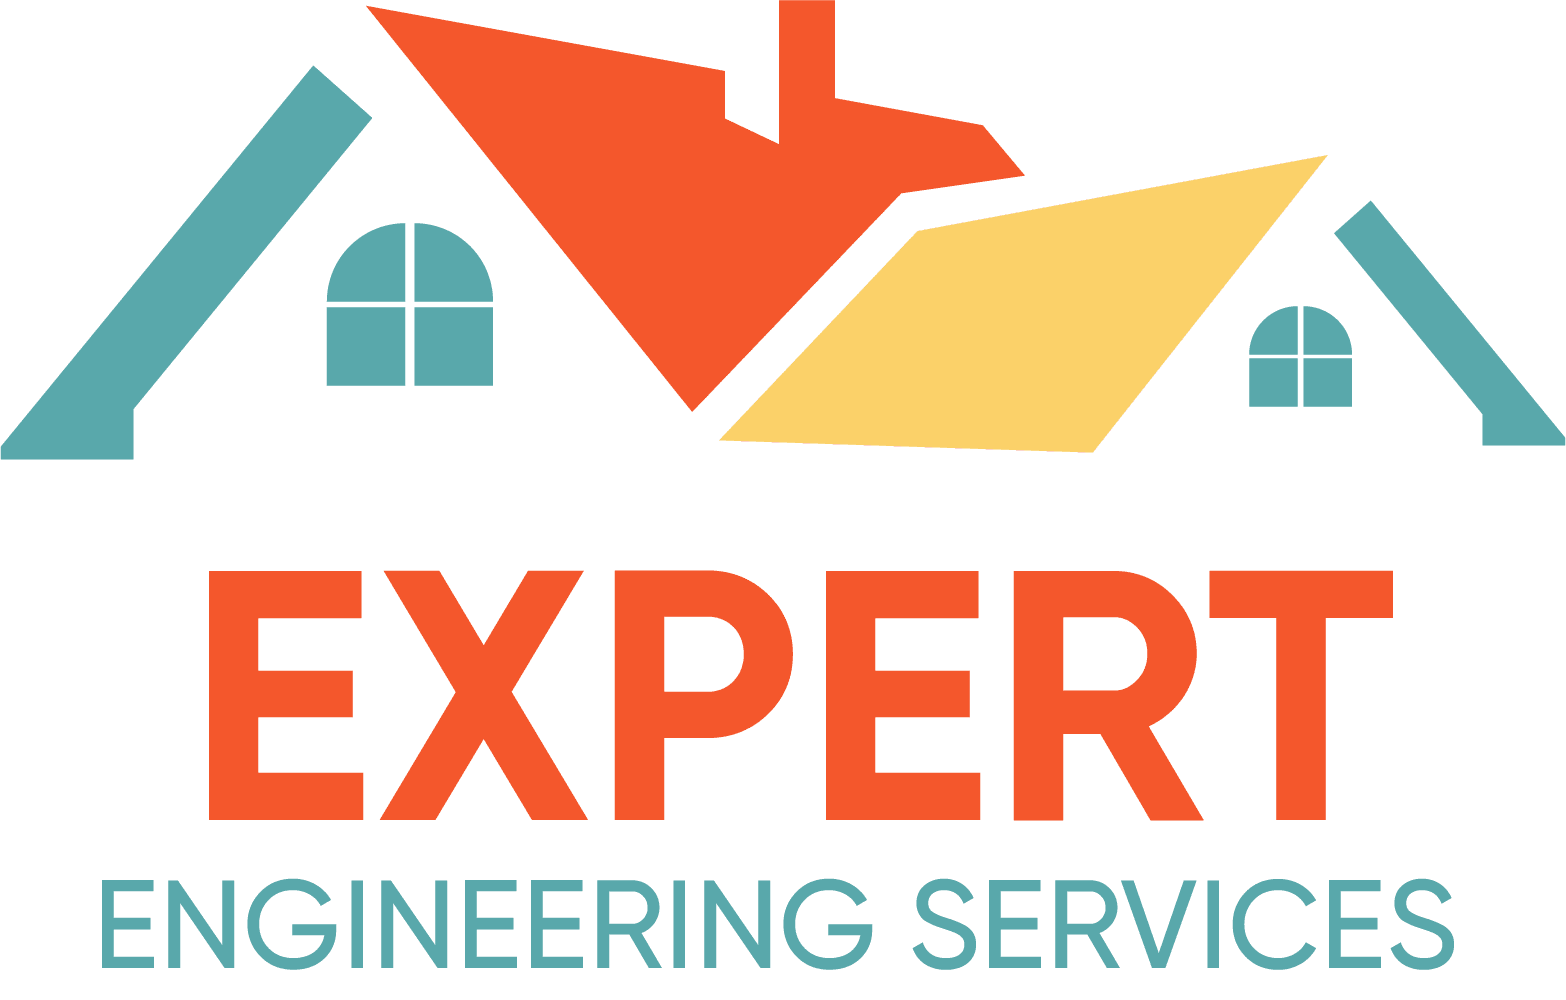 ExpertsEngineeringServices logo